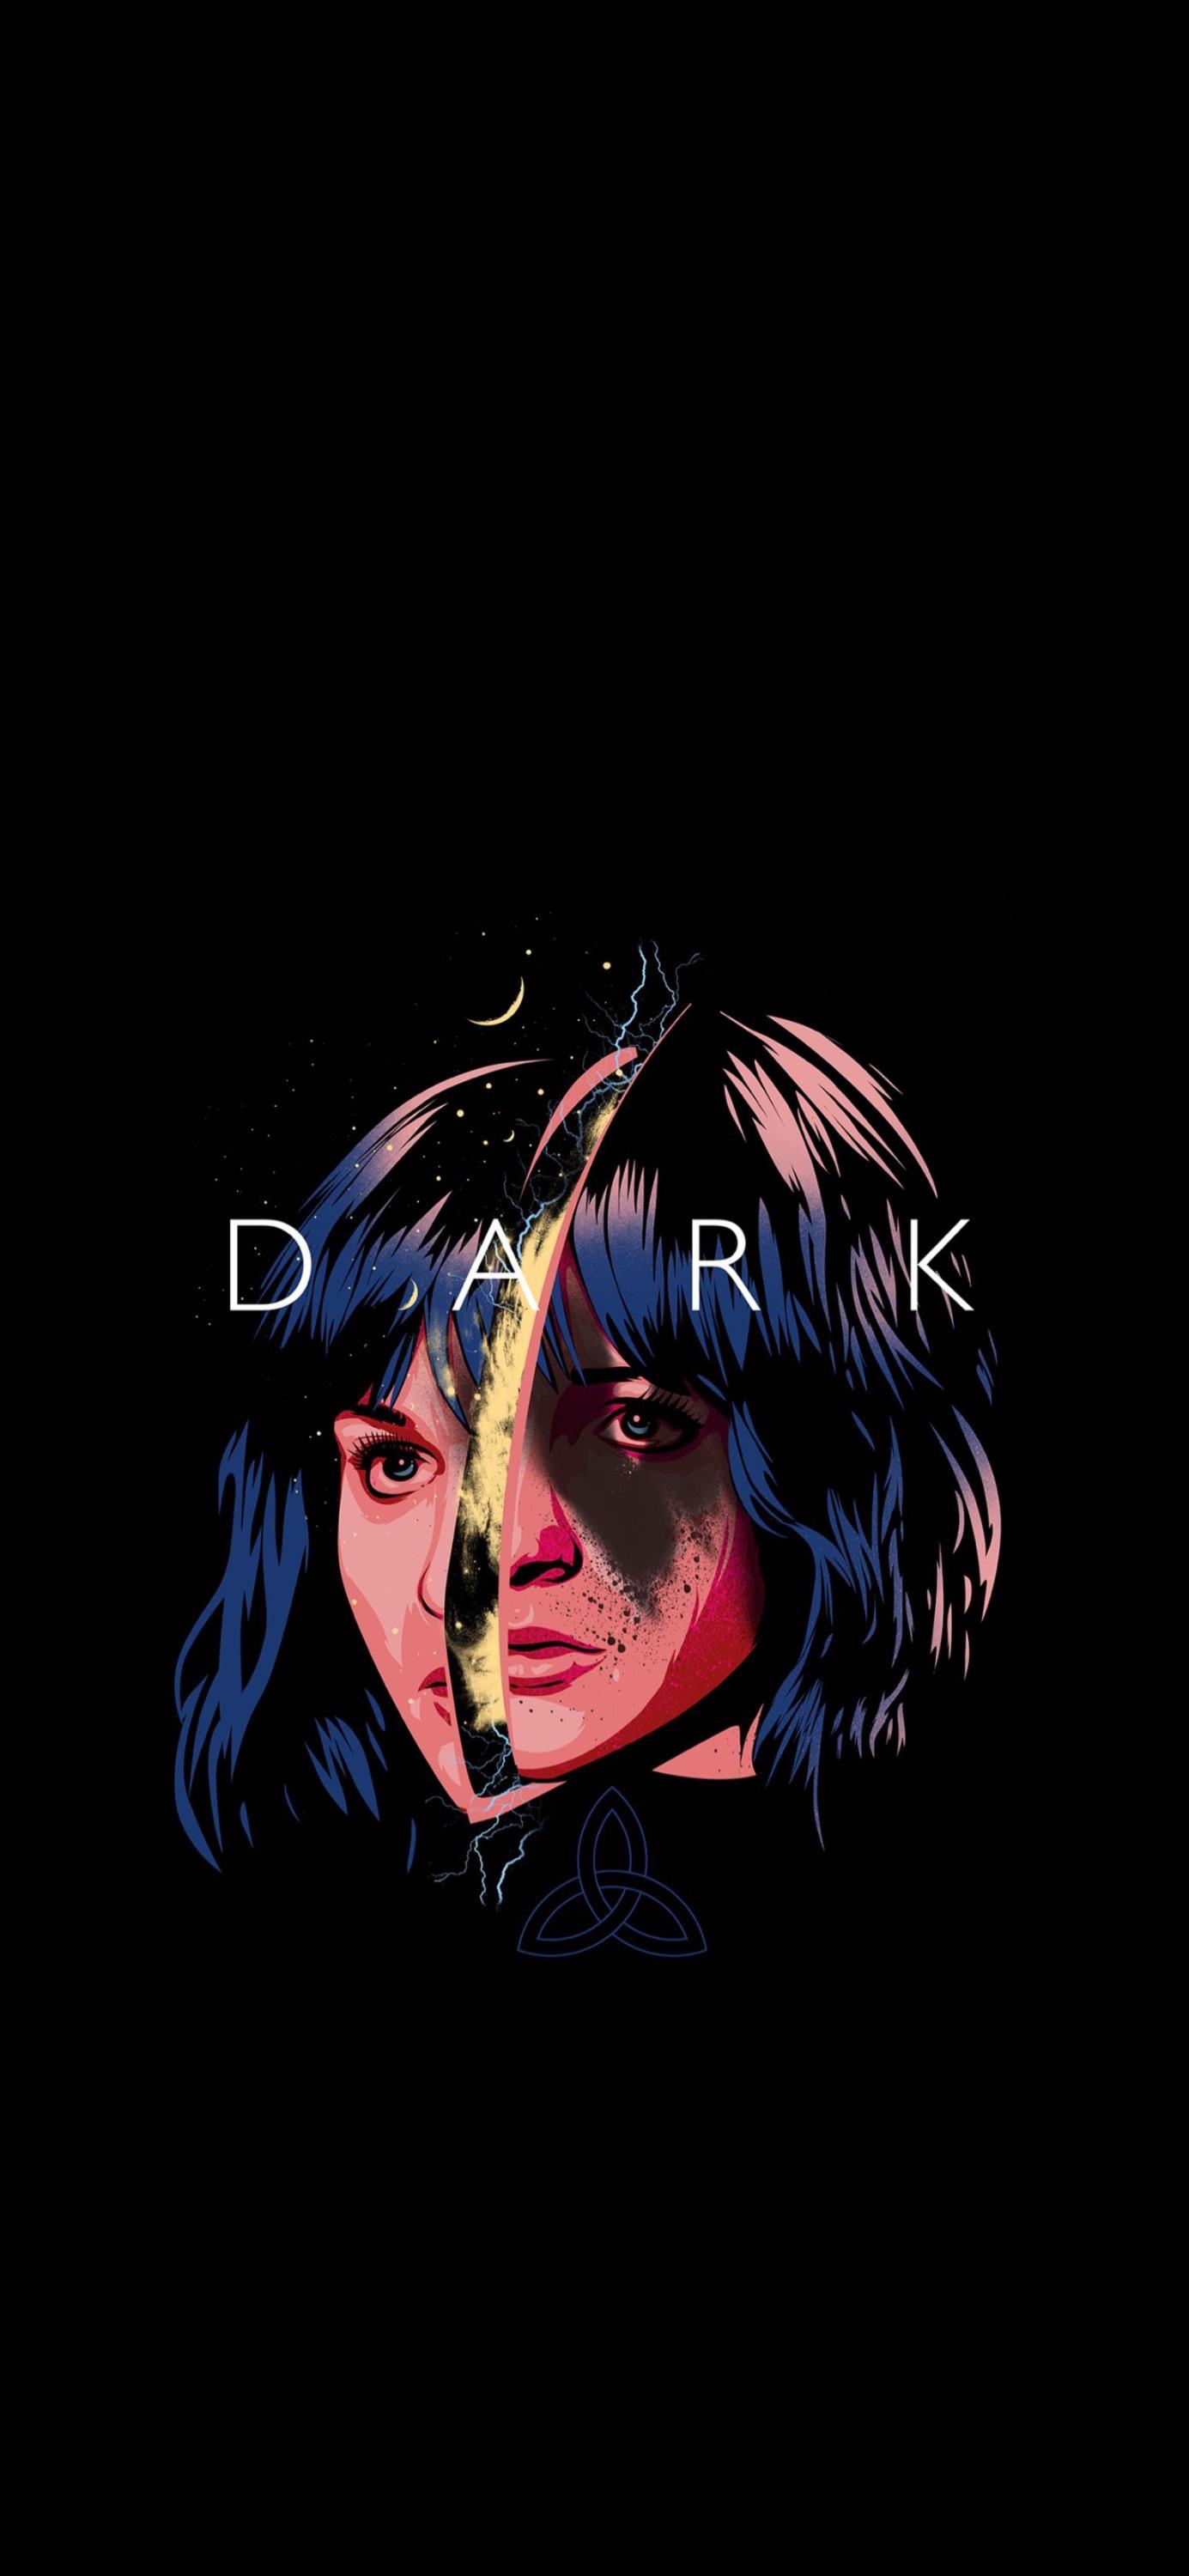 Dark Netflix Wallpaper with Artwork from official Dark Instagram Page